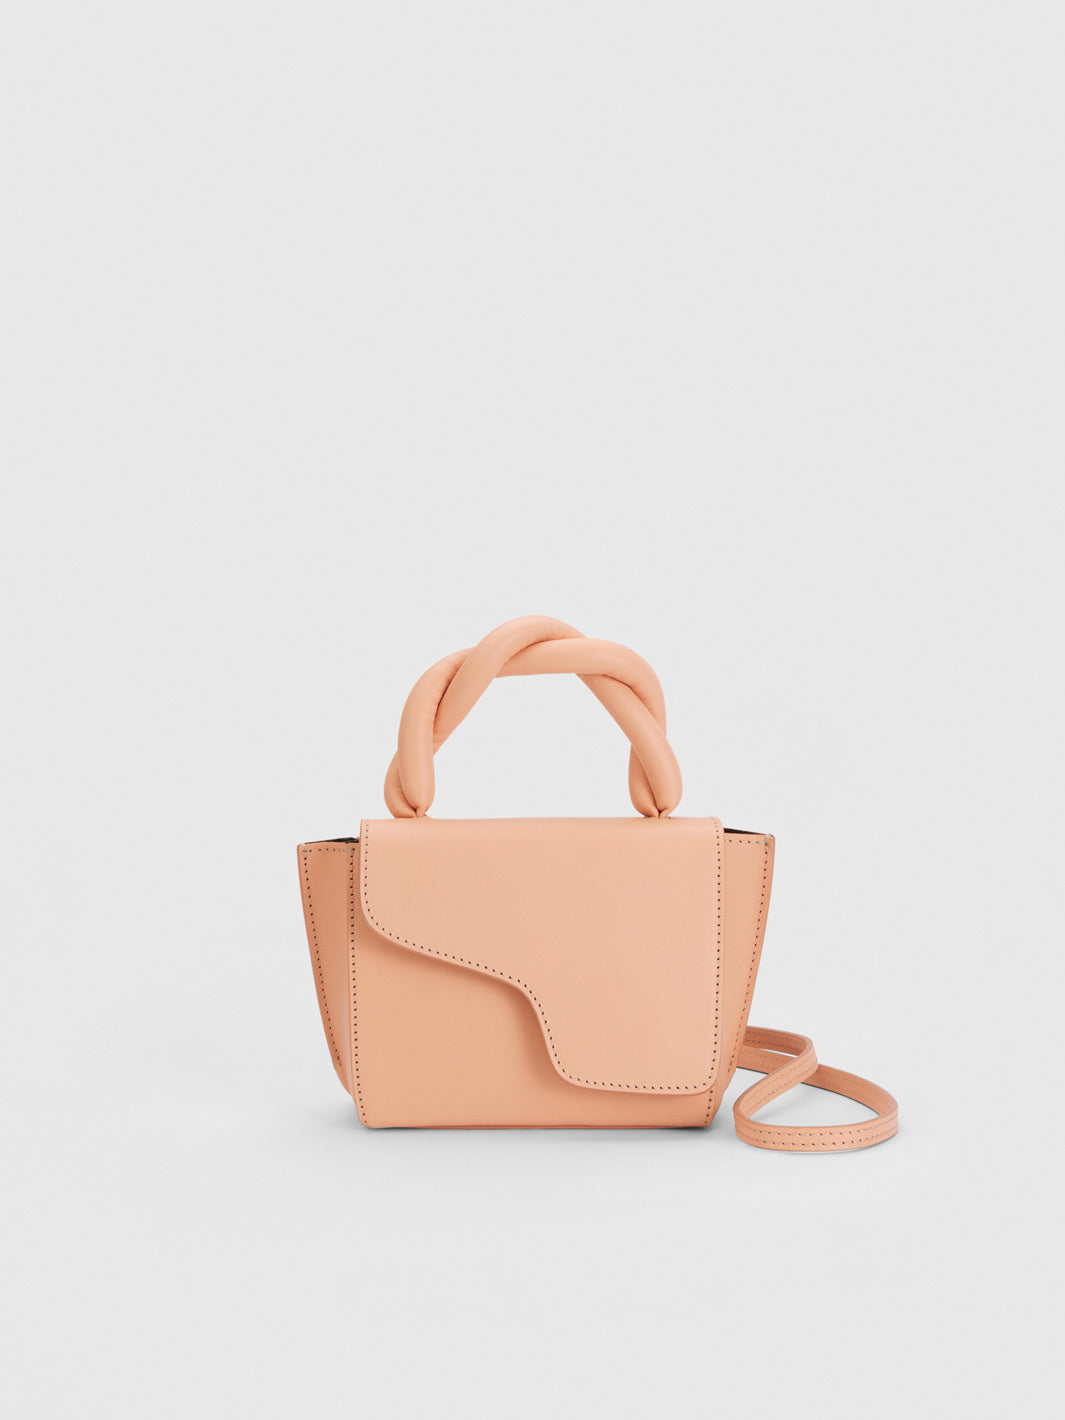 Montalbano Magnolia Leather/Nappa Mini handbag